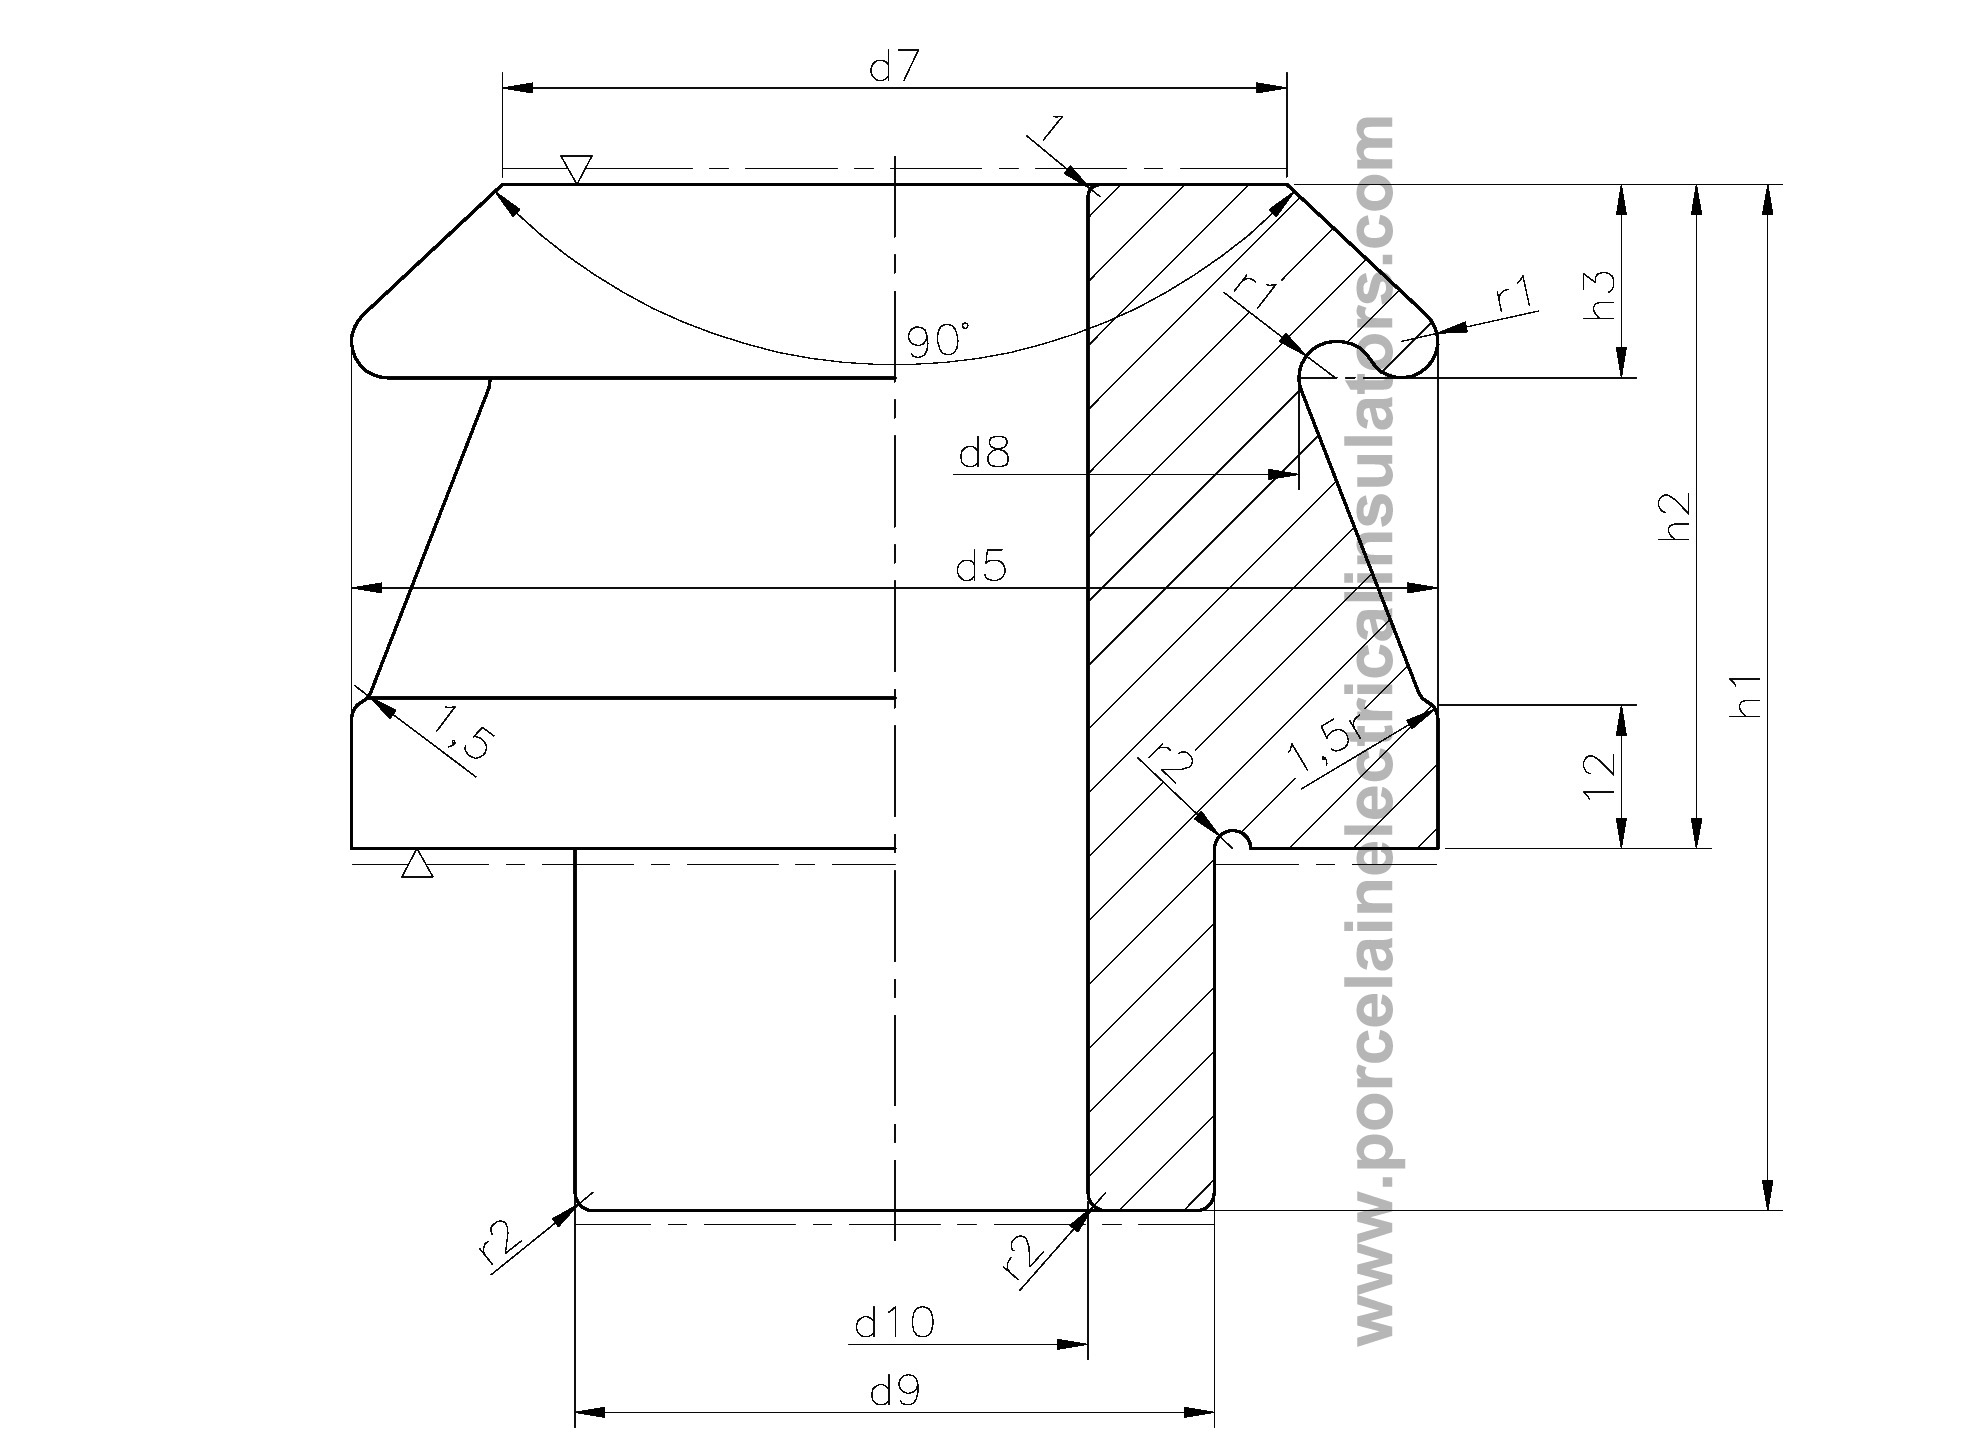 A-42530 LV transformer bushing insulator drawing